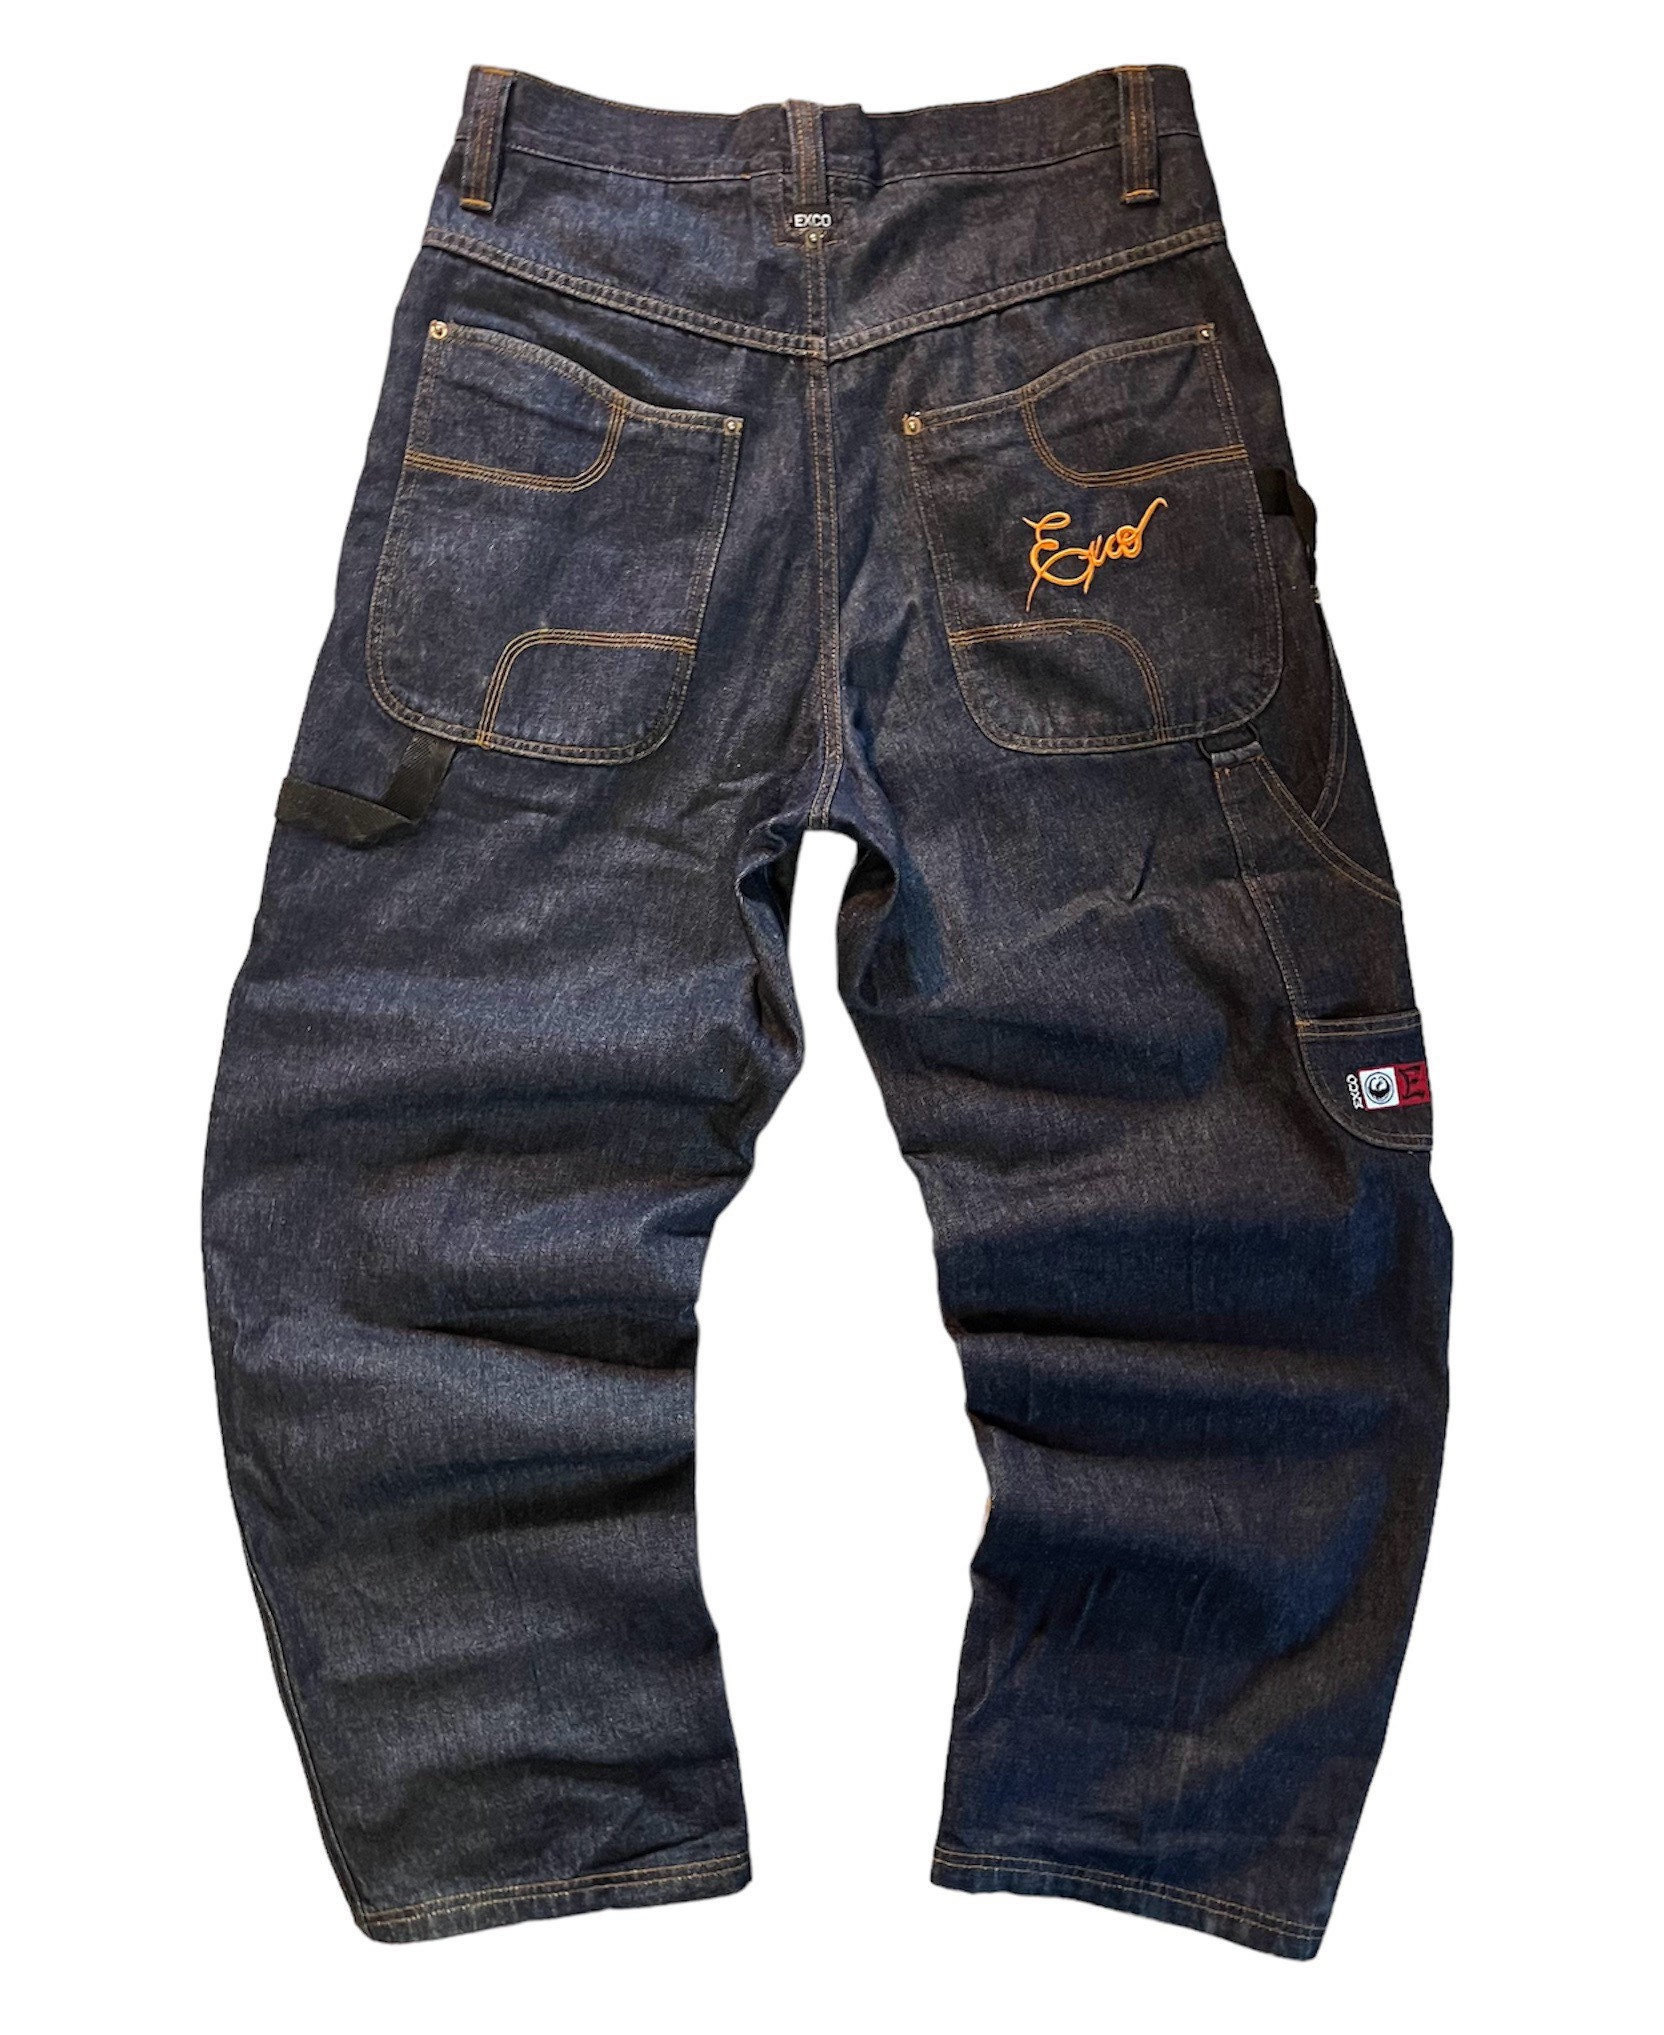 halvleder Skylight Airfield Vintage Exco Carpenter Jeans Size 34 Hip Hop Style Jeans - Etsy